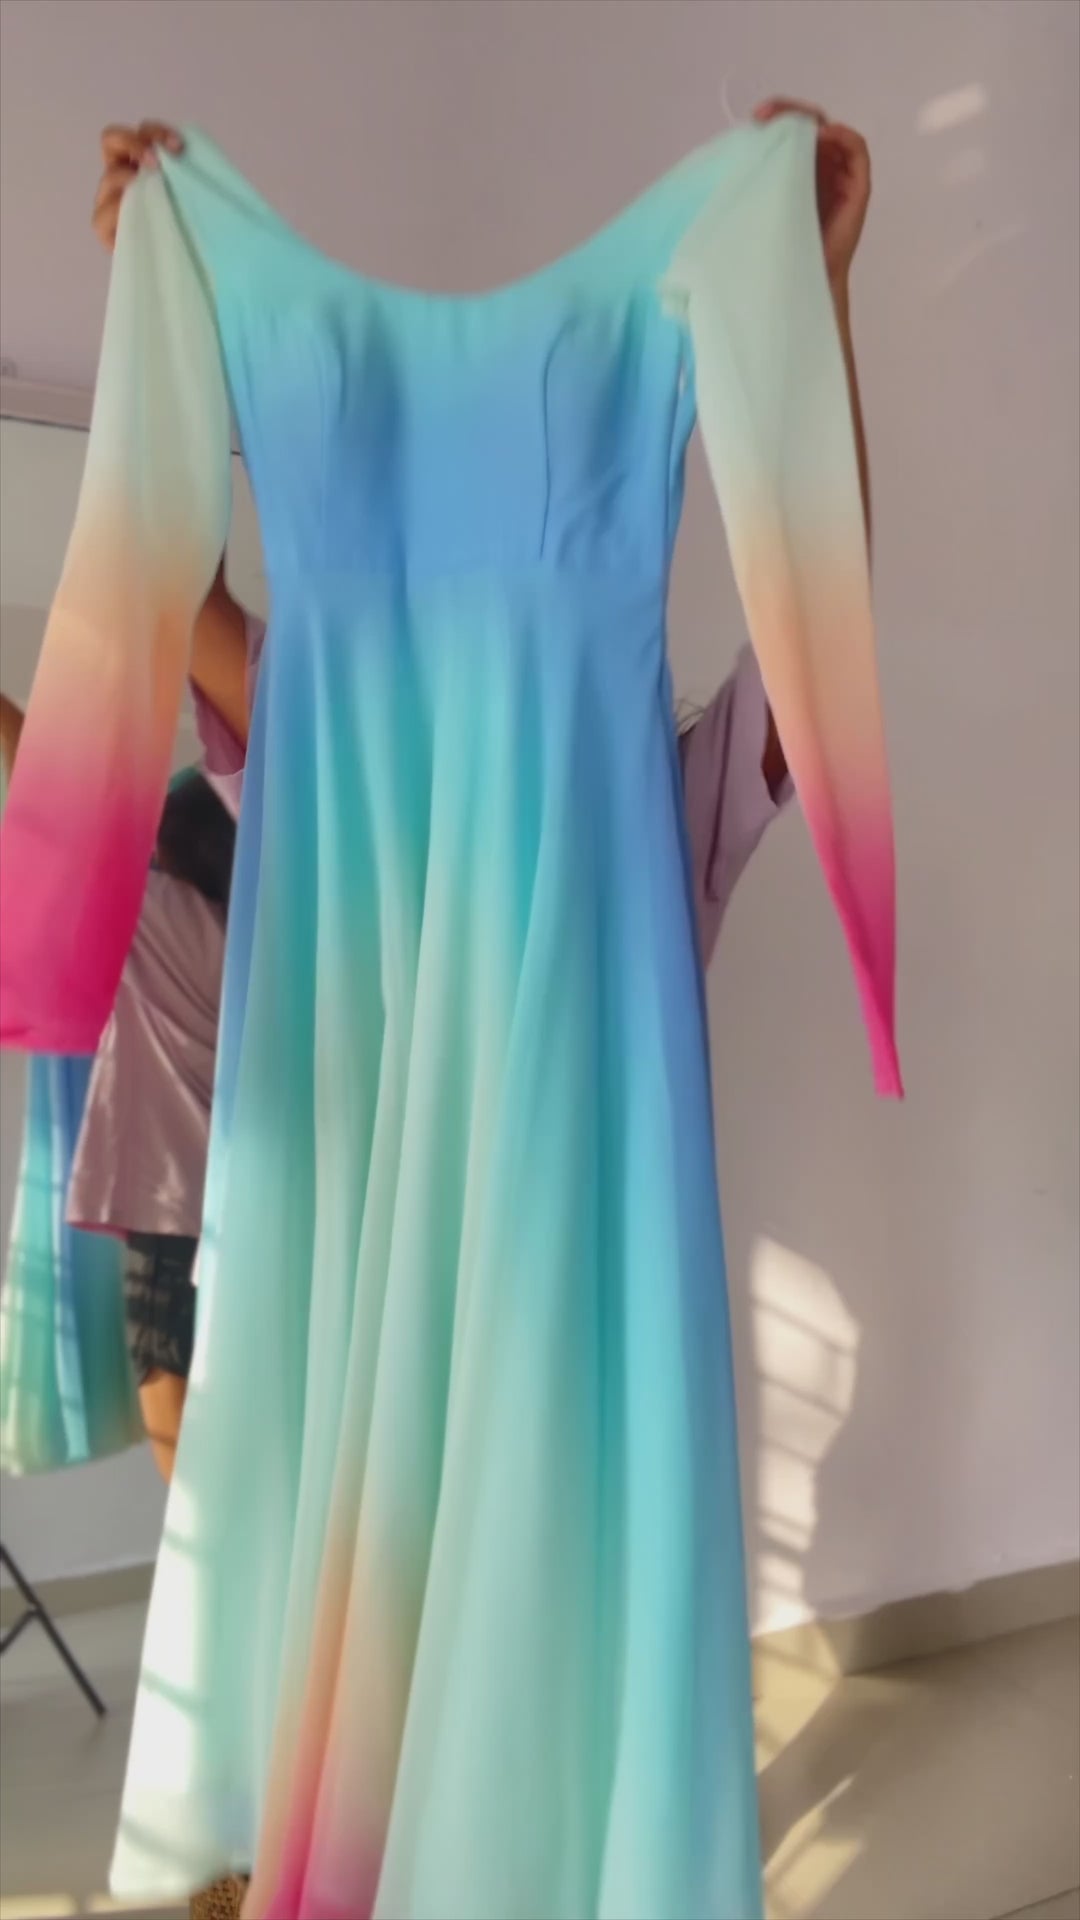 Beautiful Multi Color Fully Flair Georgette Three Piece Anarkali Suit